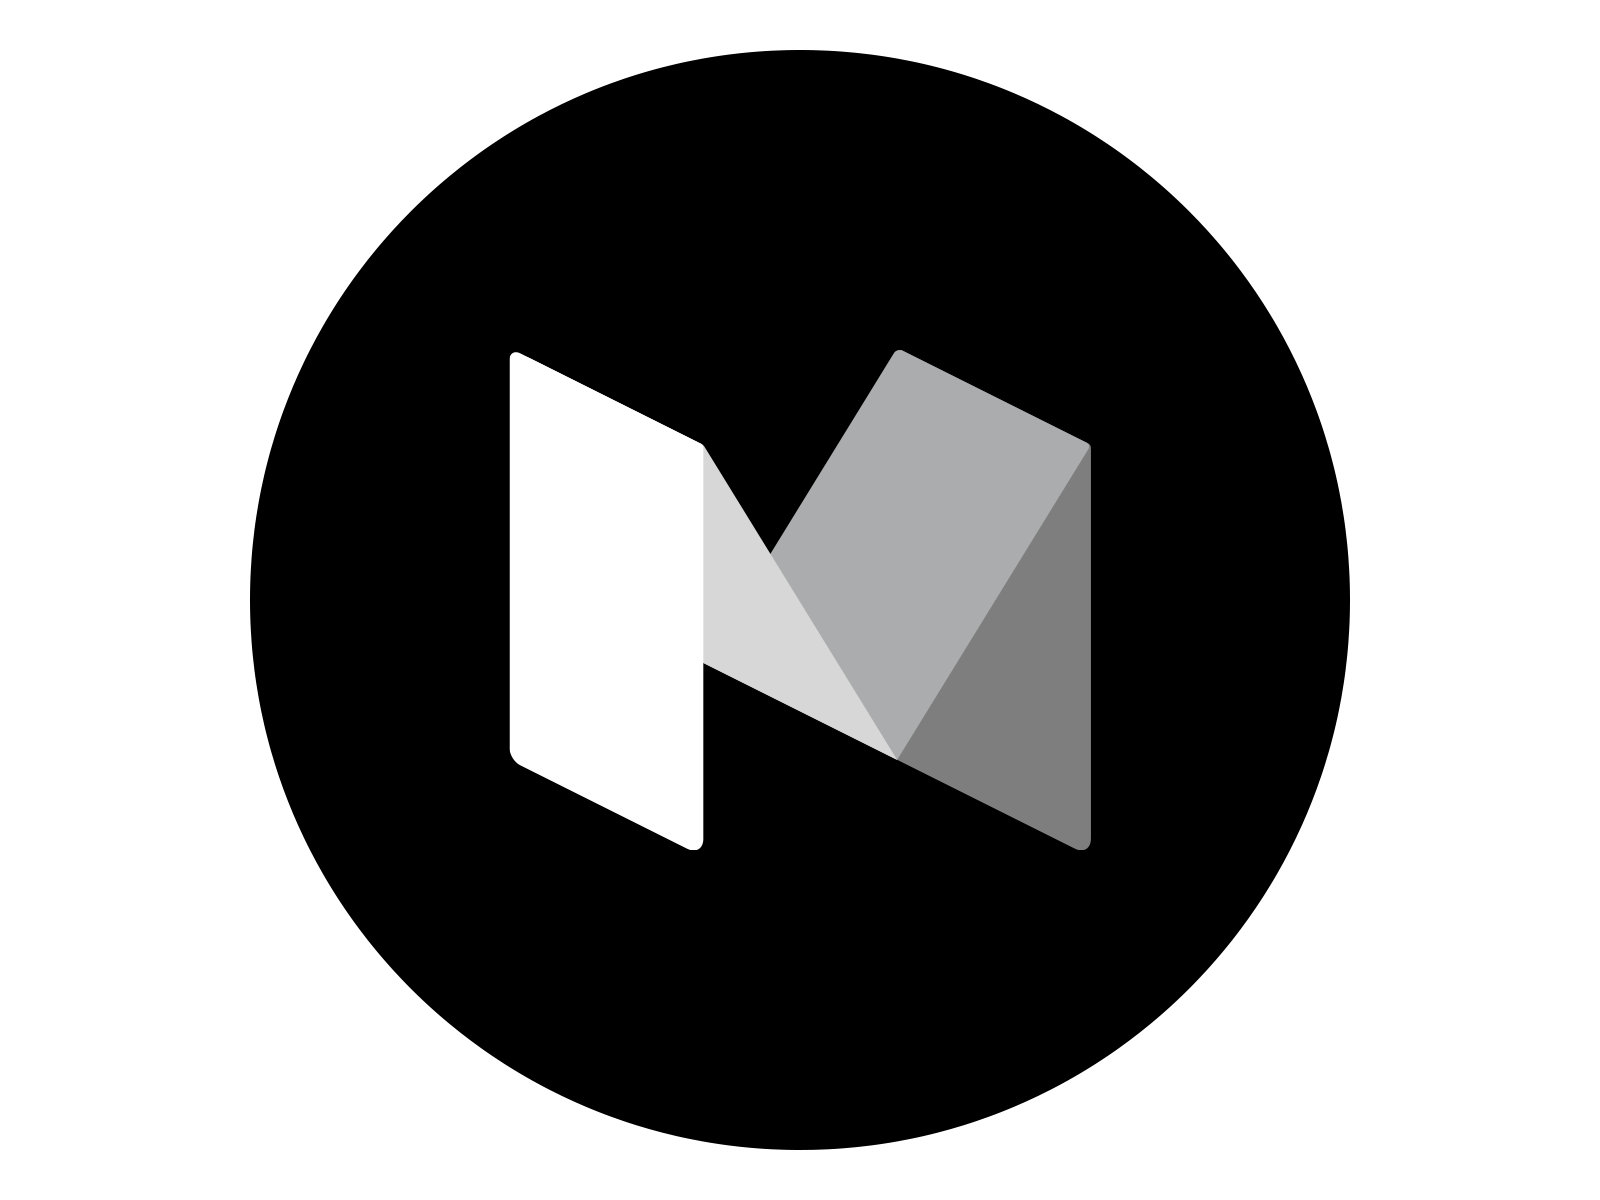 Medium Logo - Medium Logo PNG Transparent & SVG Vector - Freebie Supply